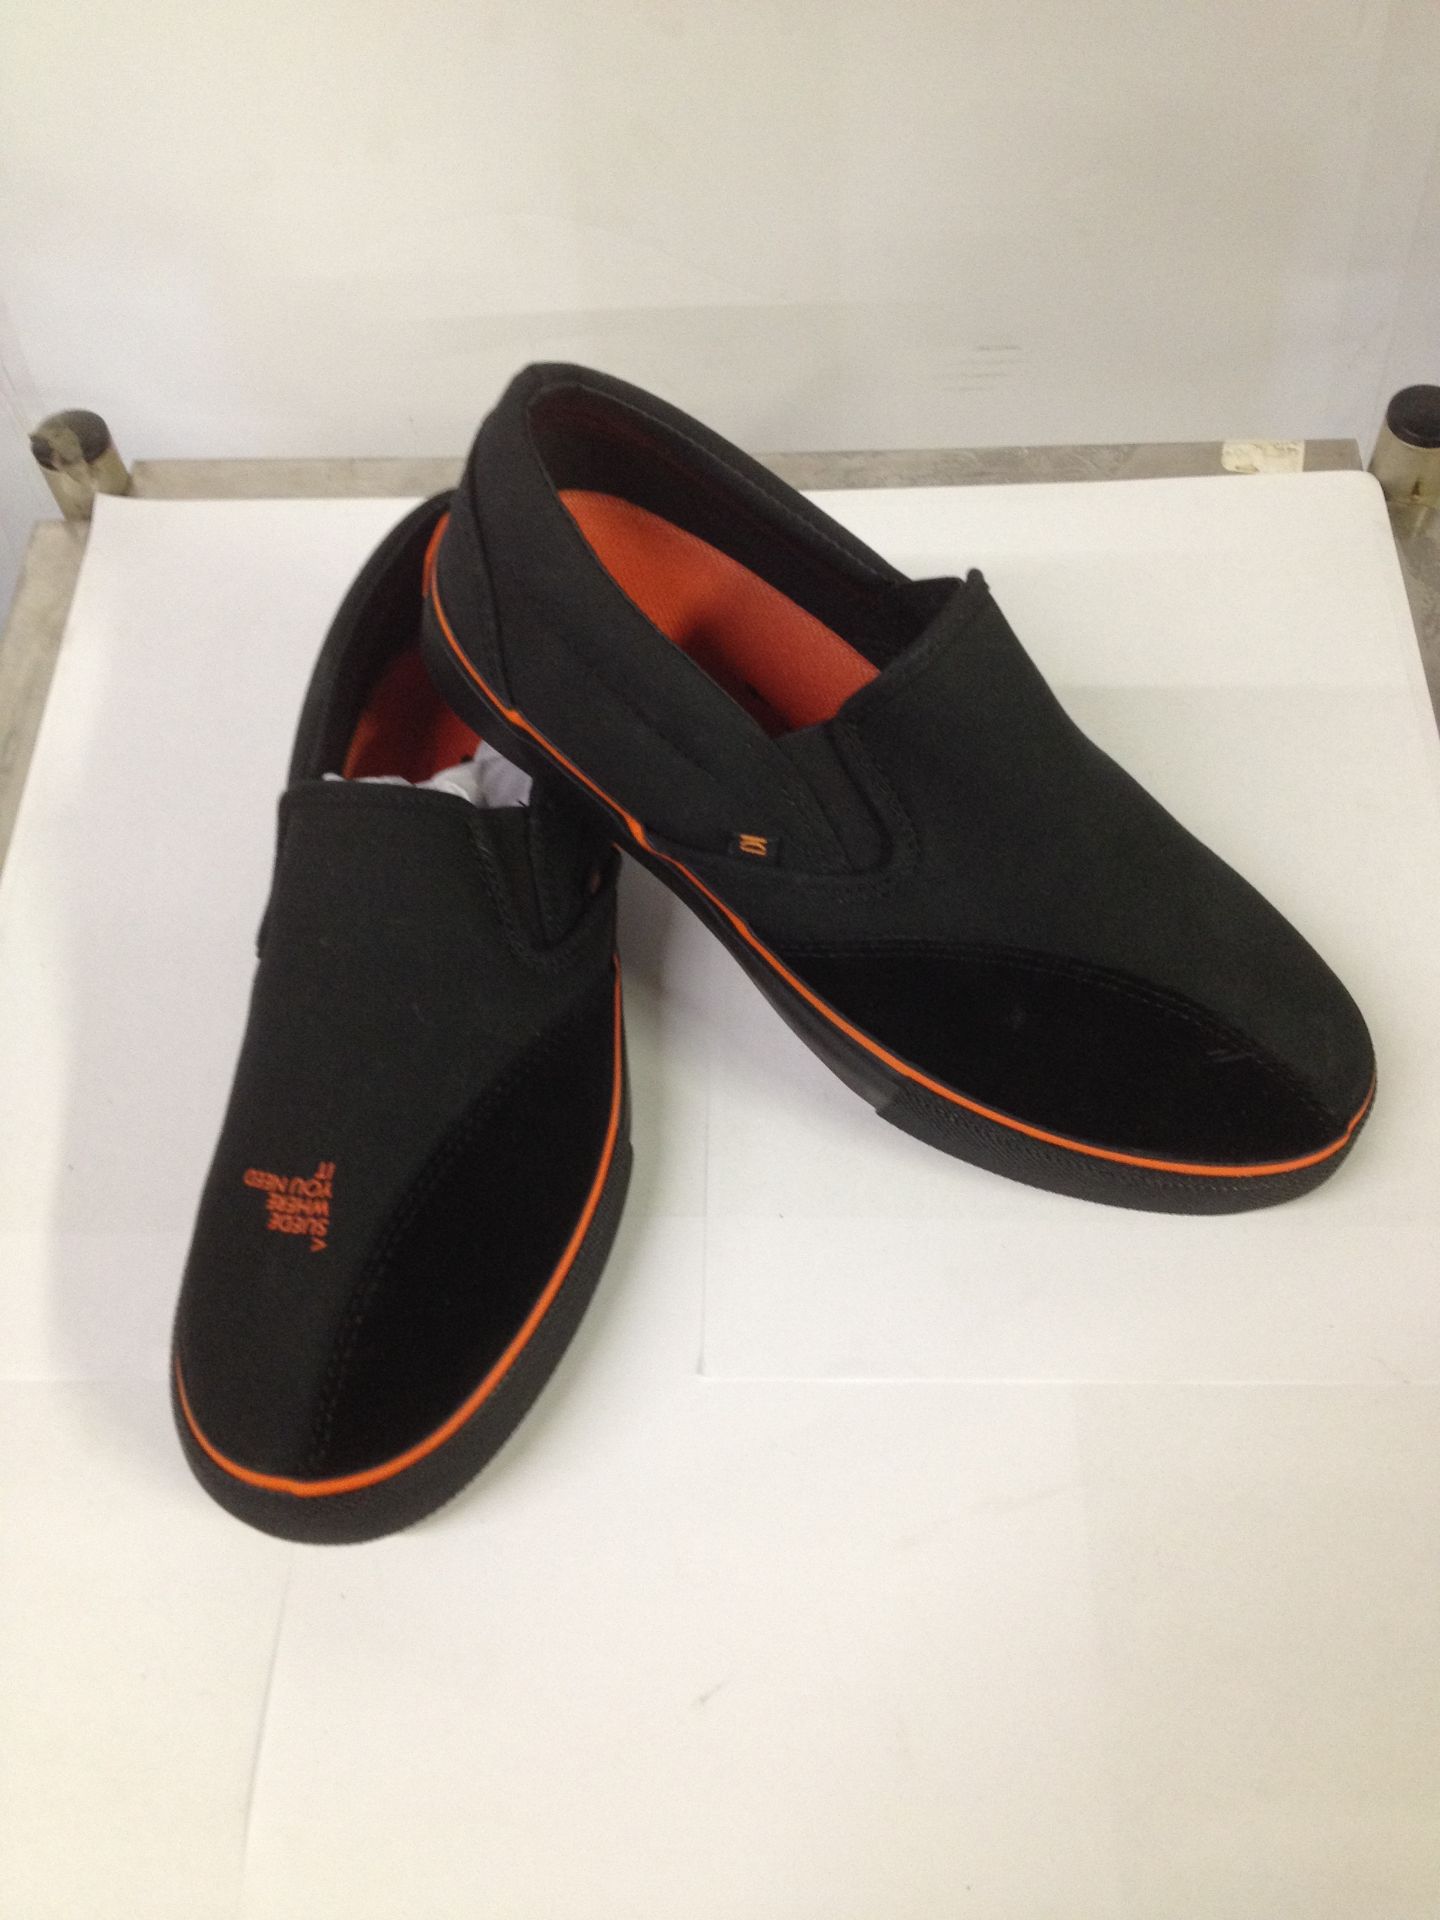 1 x Dodds Skate Shoe | Colour: Harley Black | UK Size: 6 | Unisex | RRP £ 55